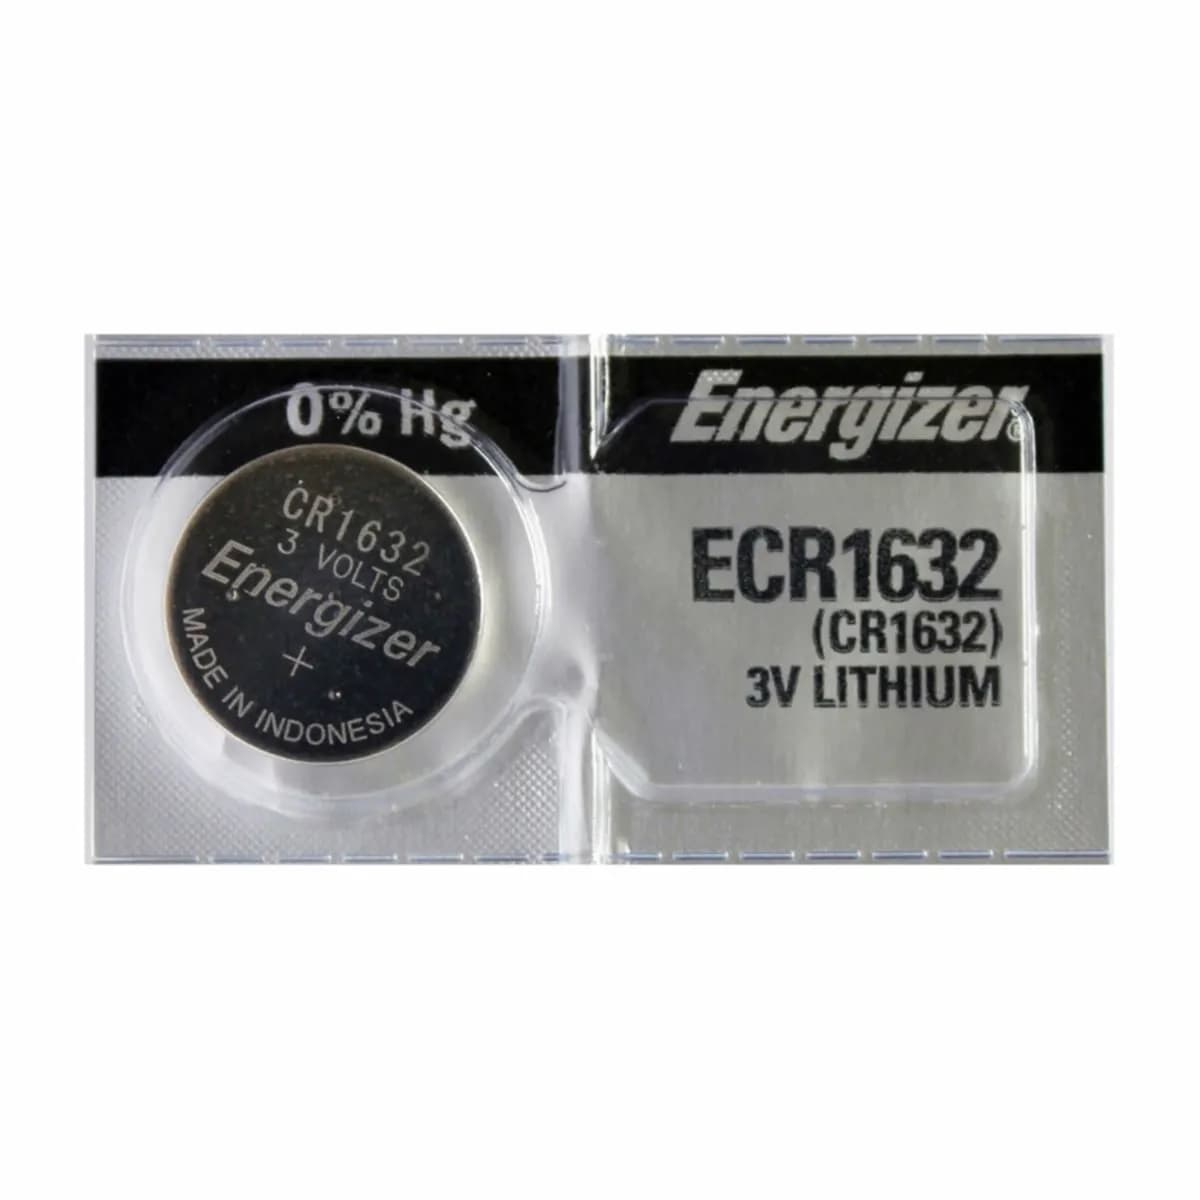 Energizer Ecr 1632 Battery